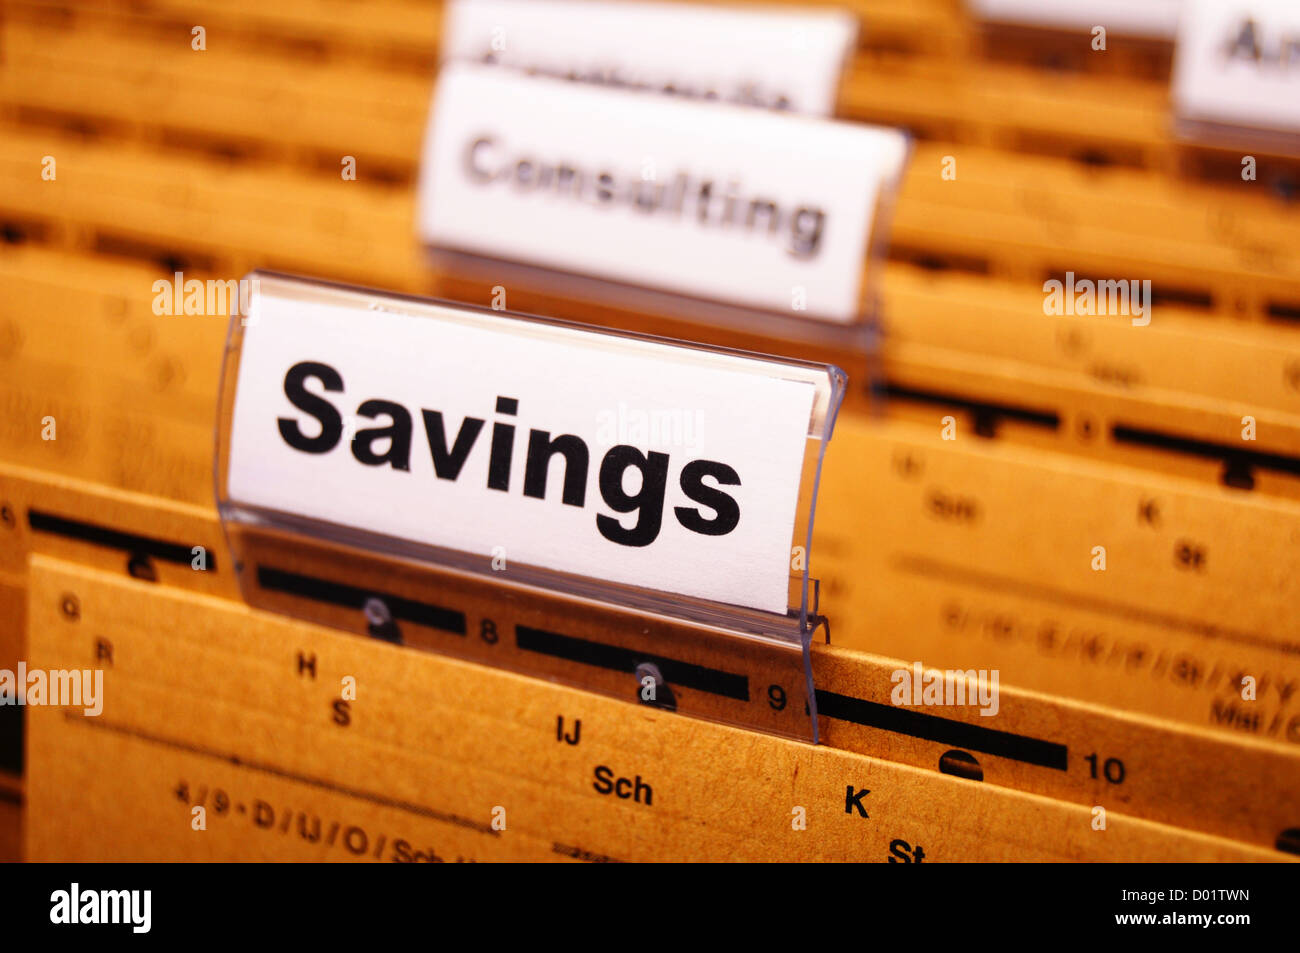 https://c8.alamy.com/compes/d01twn/la-palabra-ahorro-en-carpeta-de-negocios-mostrando-ahorrando-dinero-concepto-d01twn.jpg